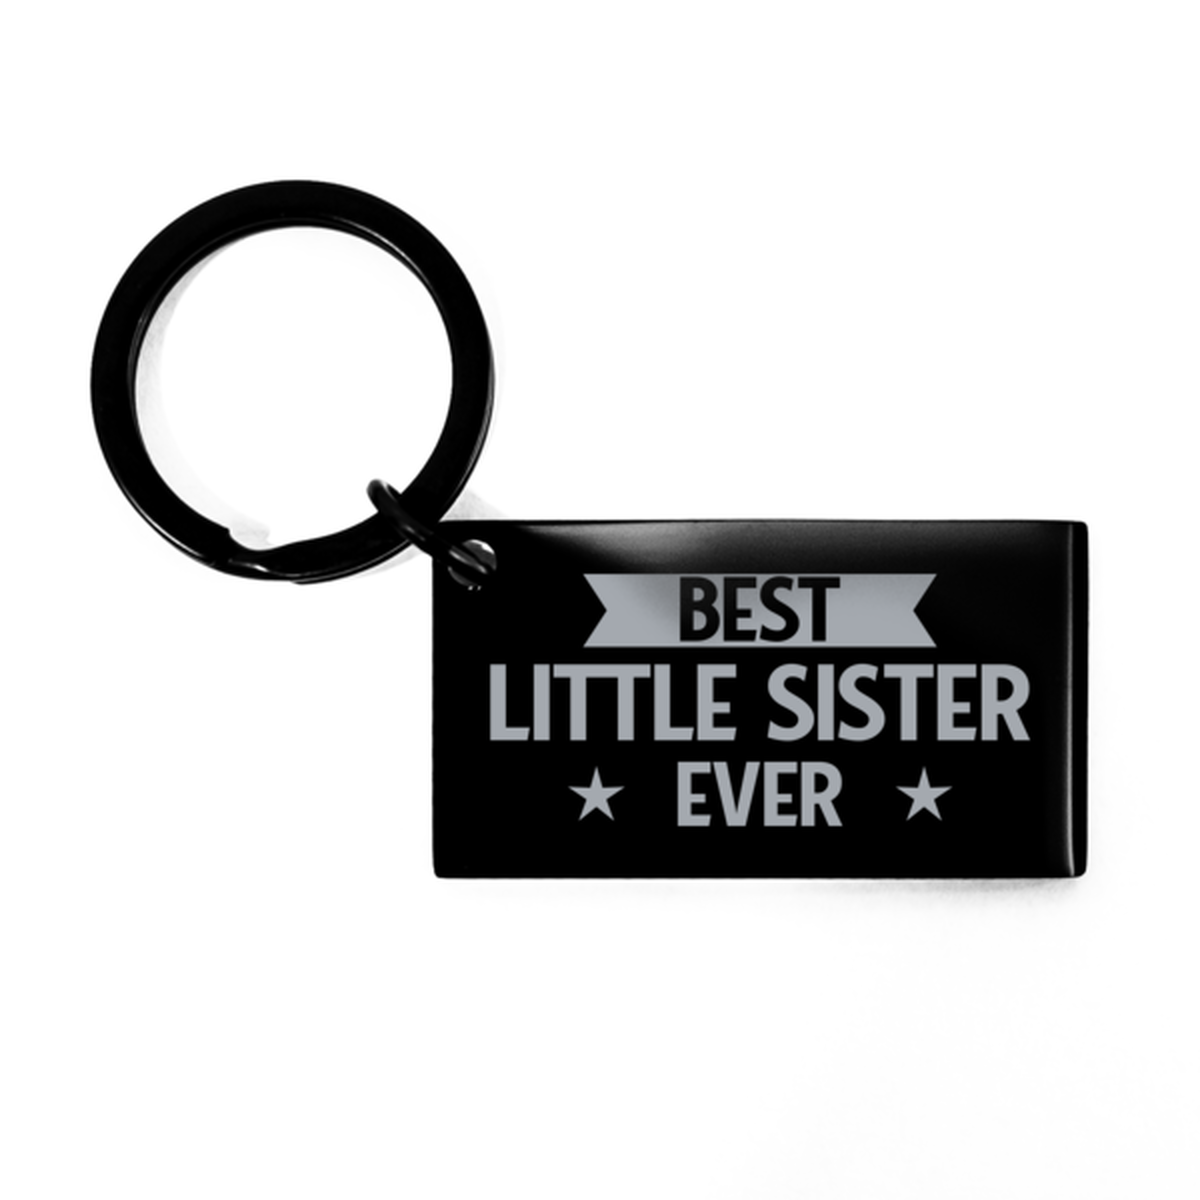 Best Little Sister Ever Little Sister Gifts, Funny Black Keychain For Little Sister, Birthday Engraved Keyring Presents For Women